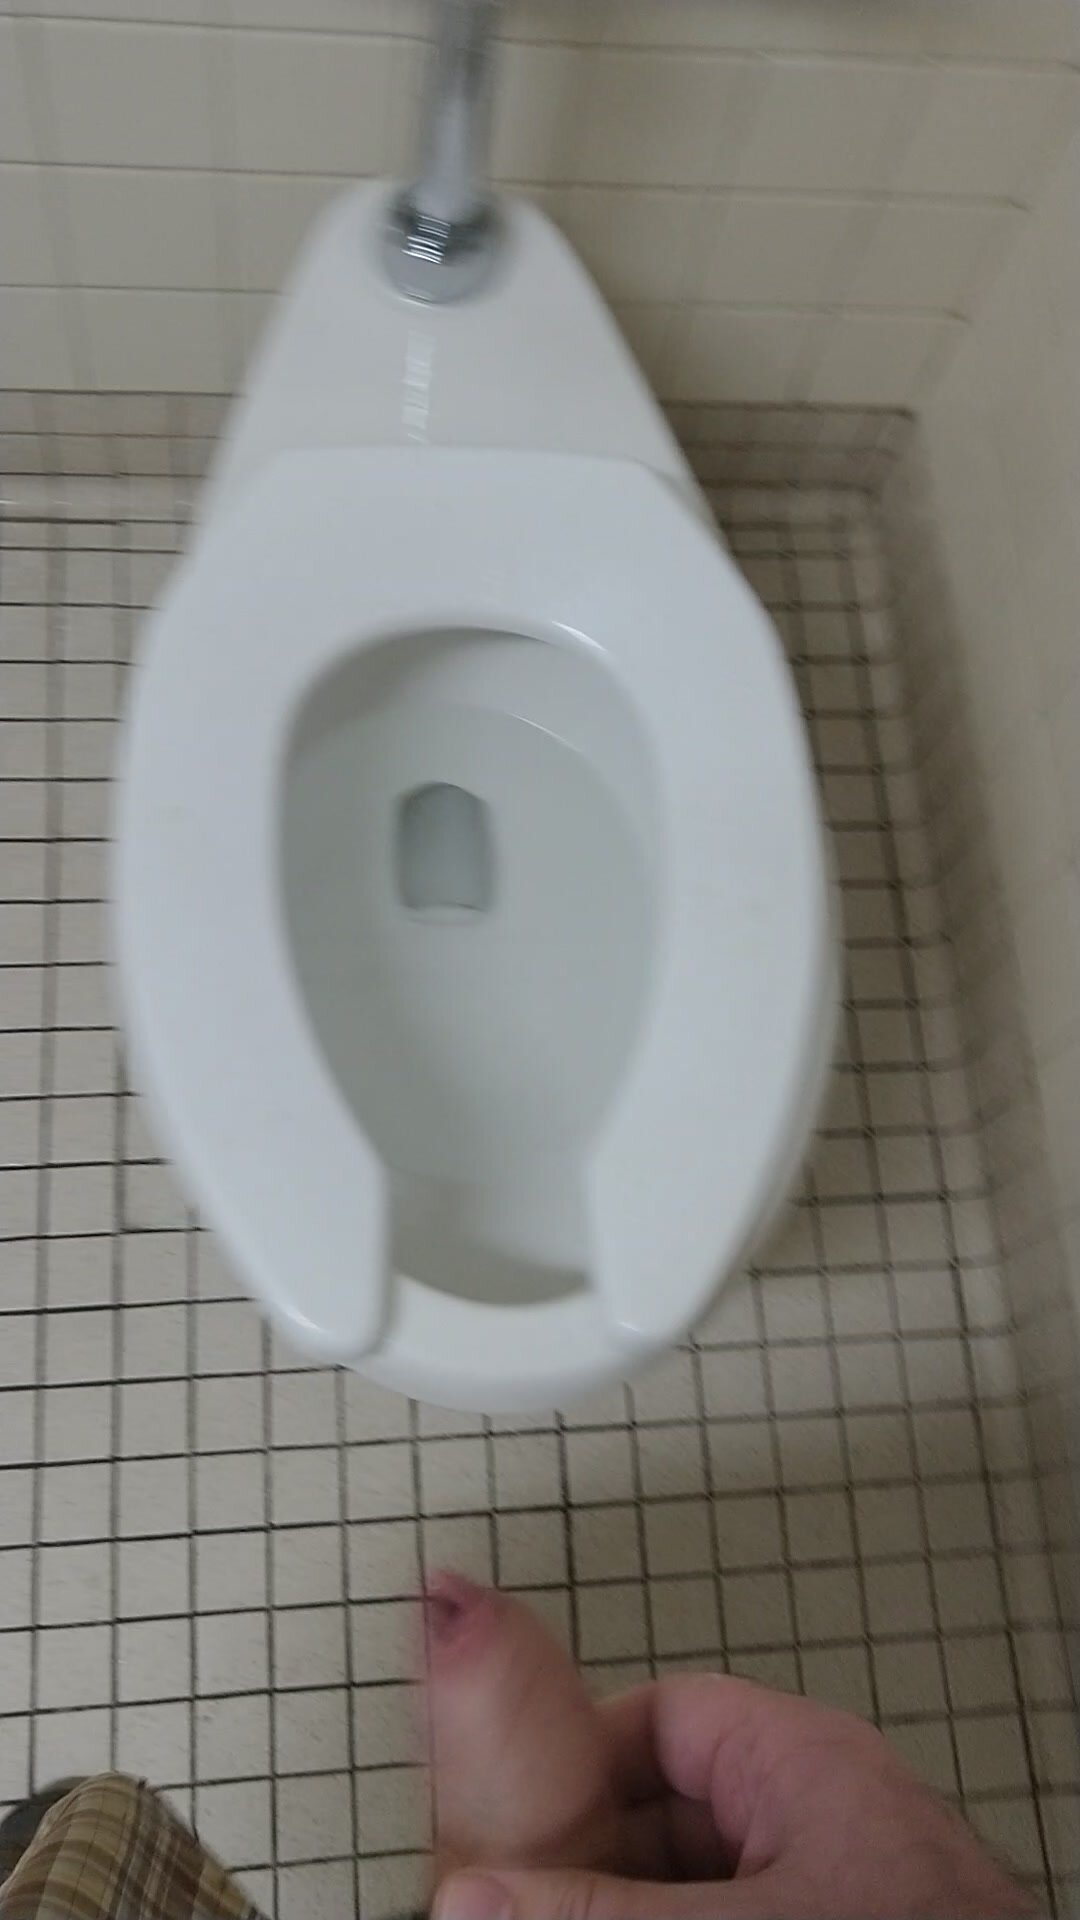 Pissing into bathroom vent, floor, toilet, and walls